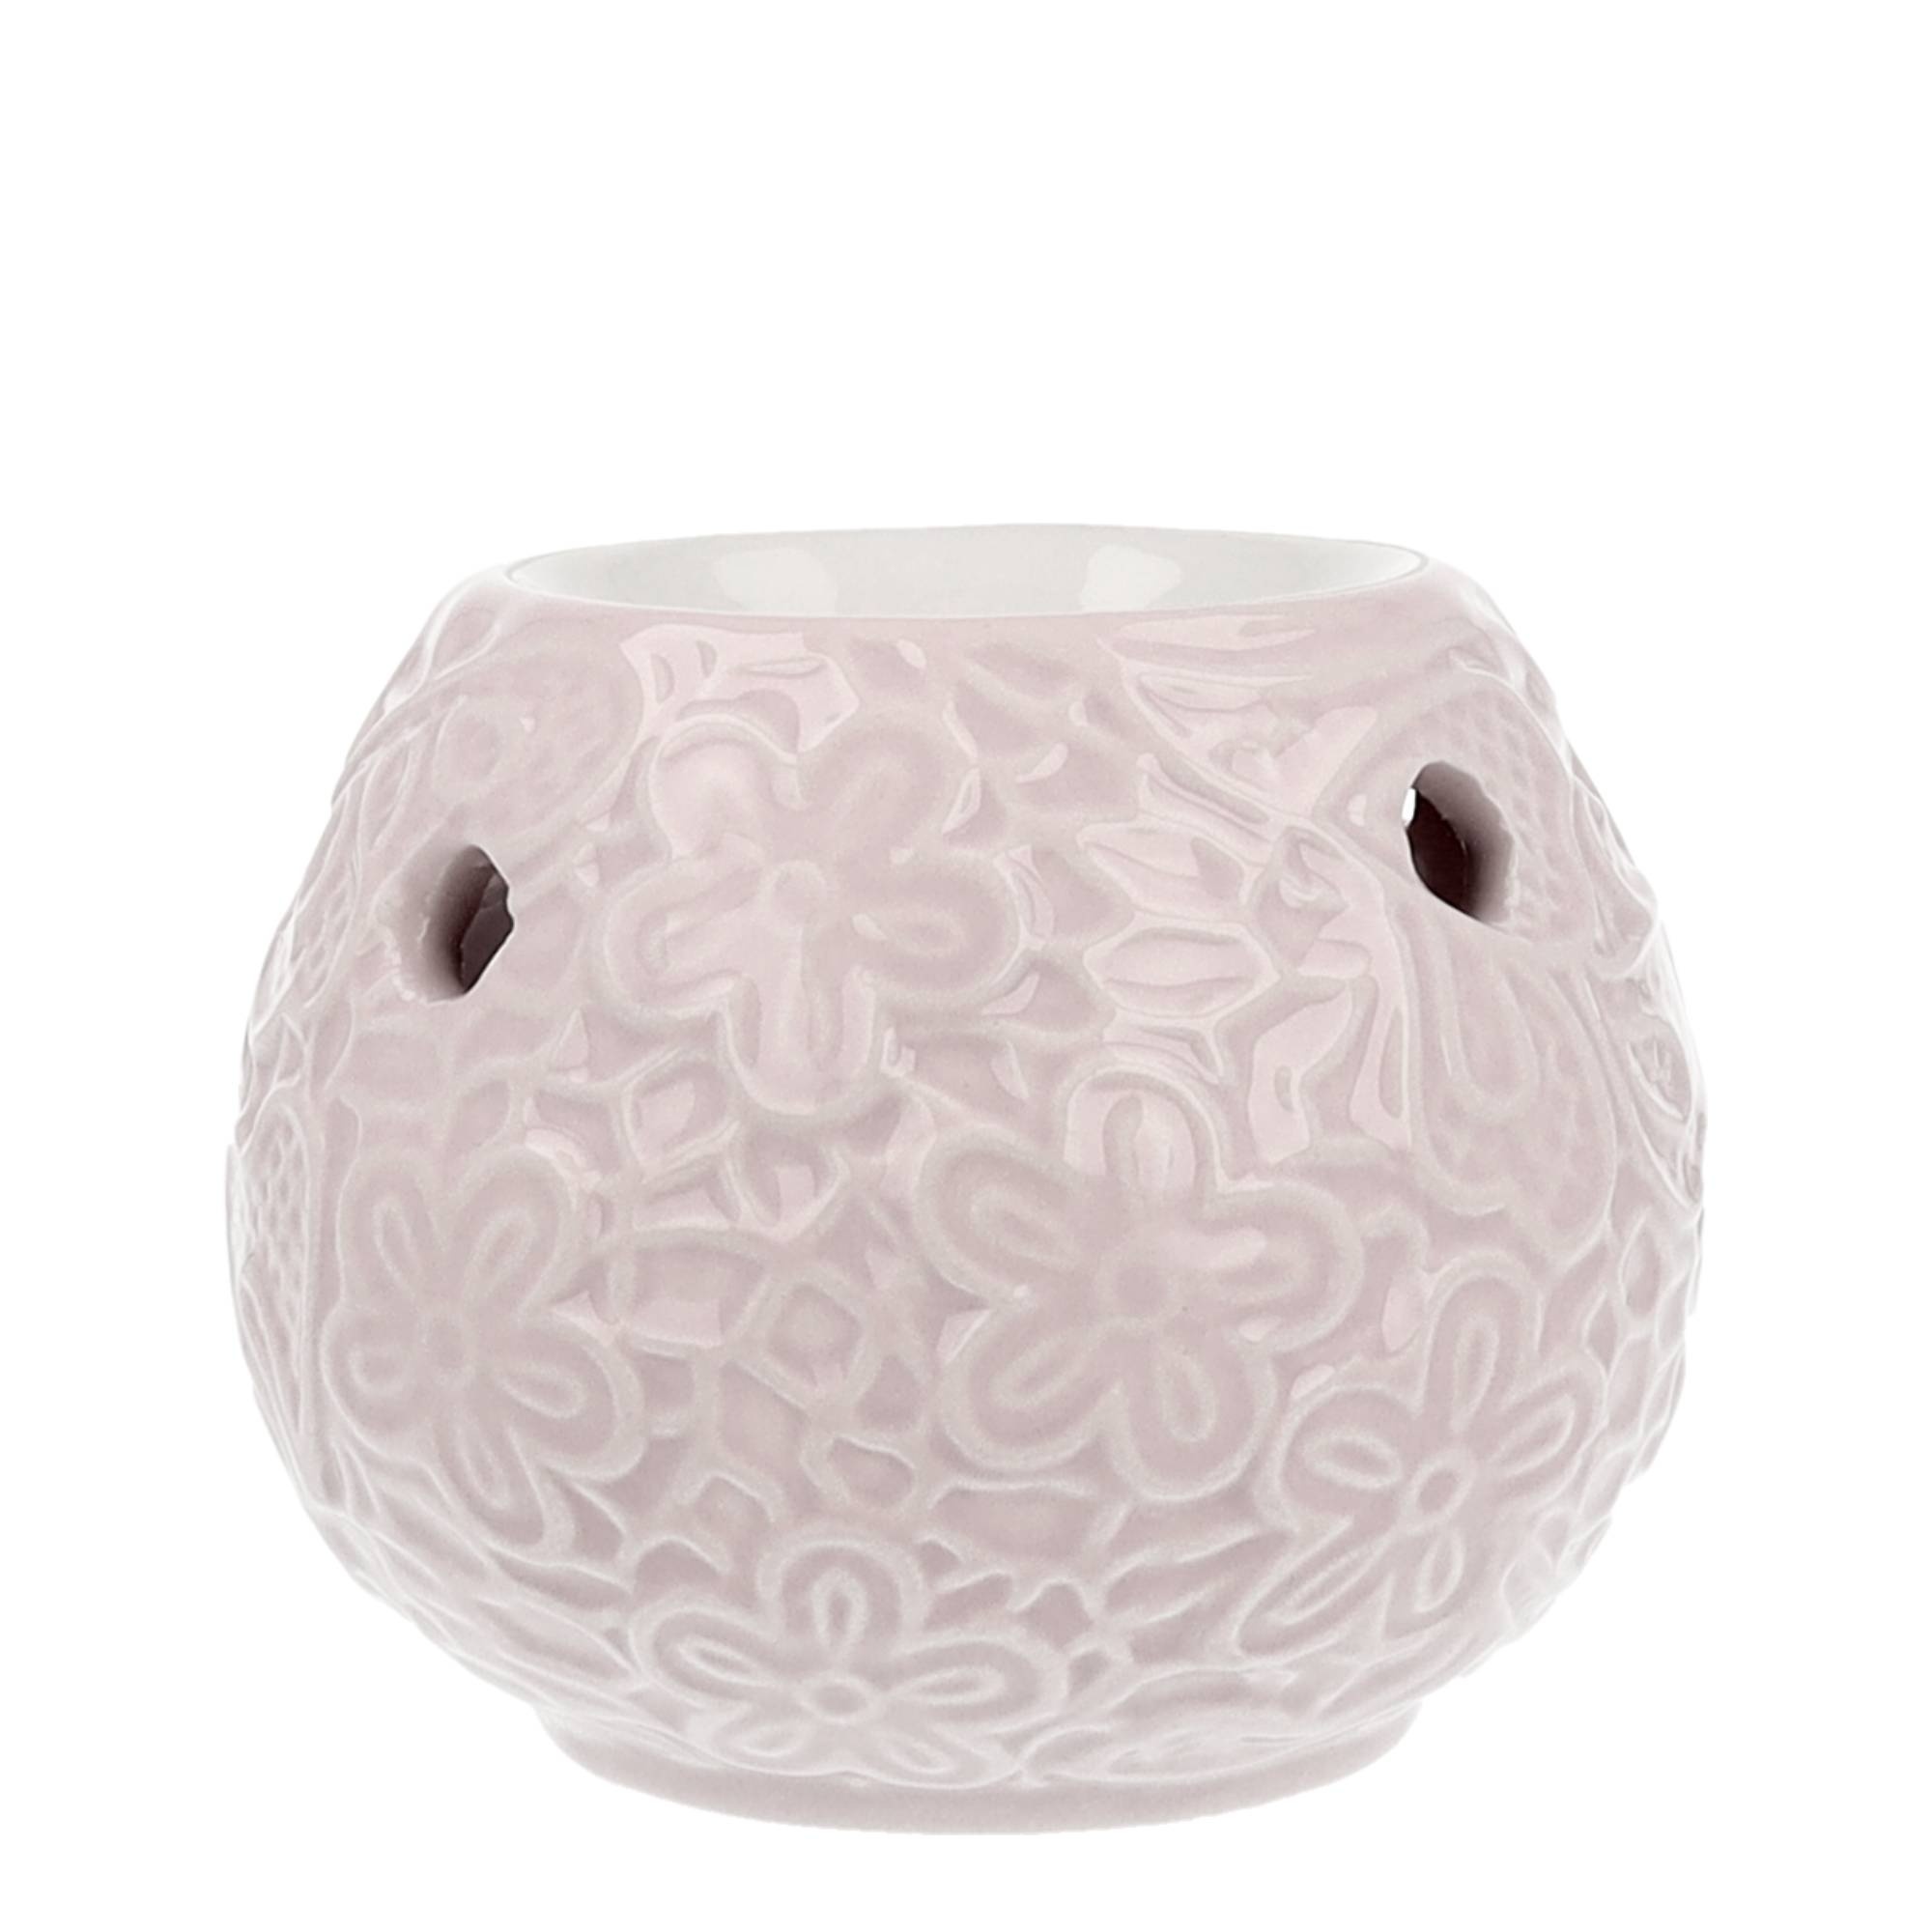 Scentchips® Ceramic Leafs Pink scented wax burner